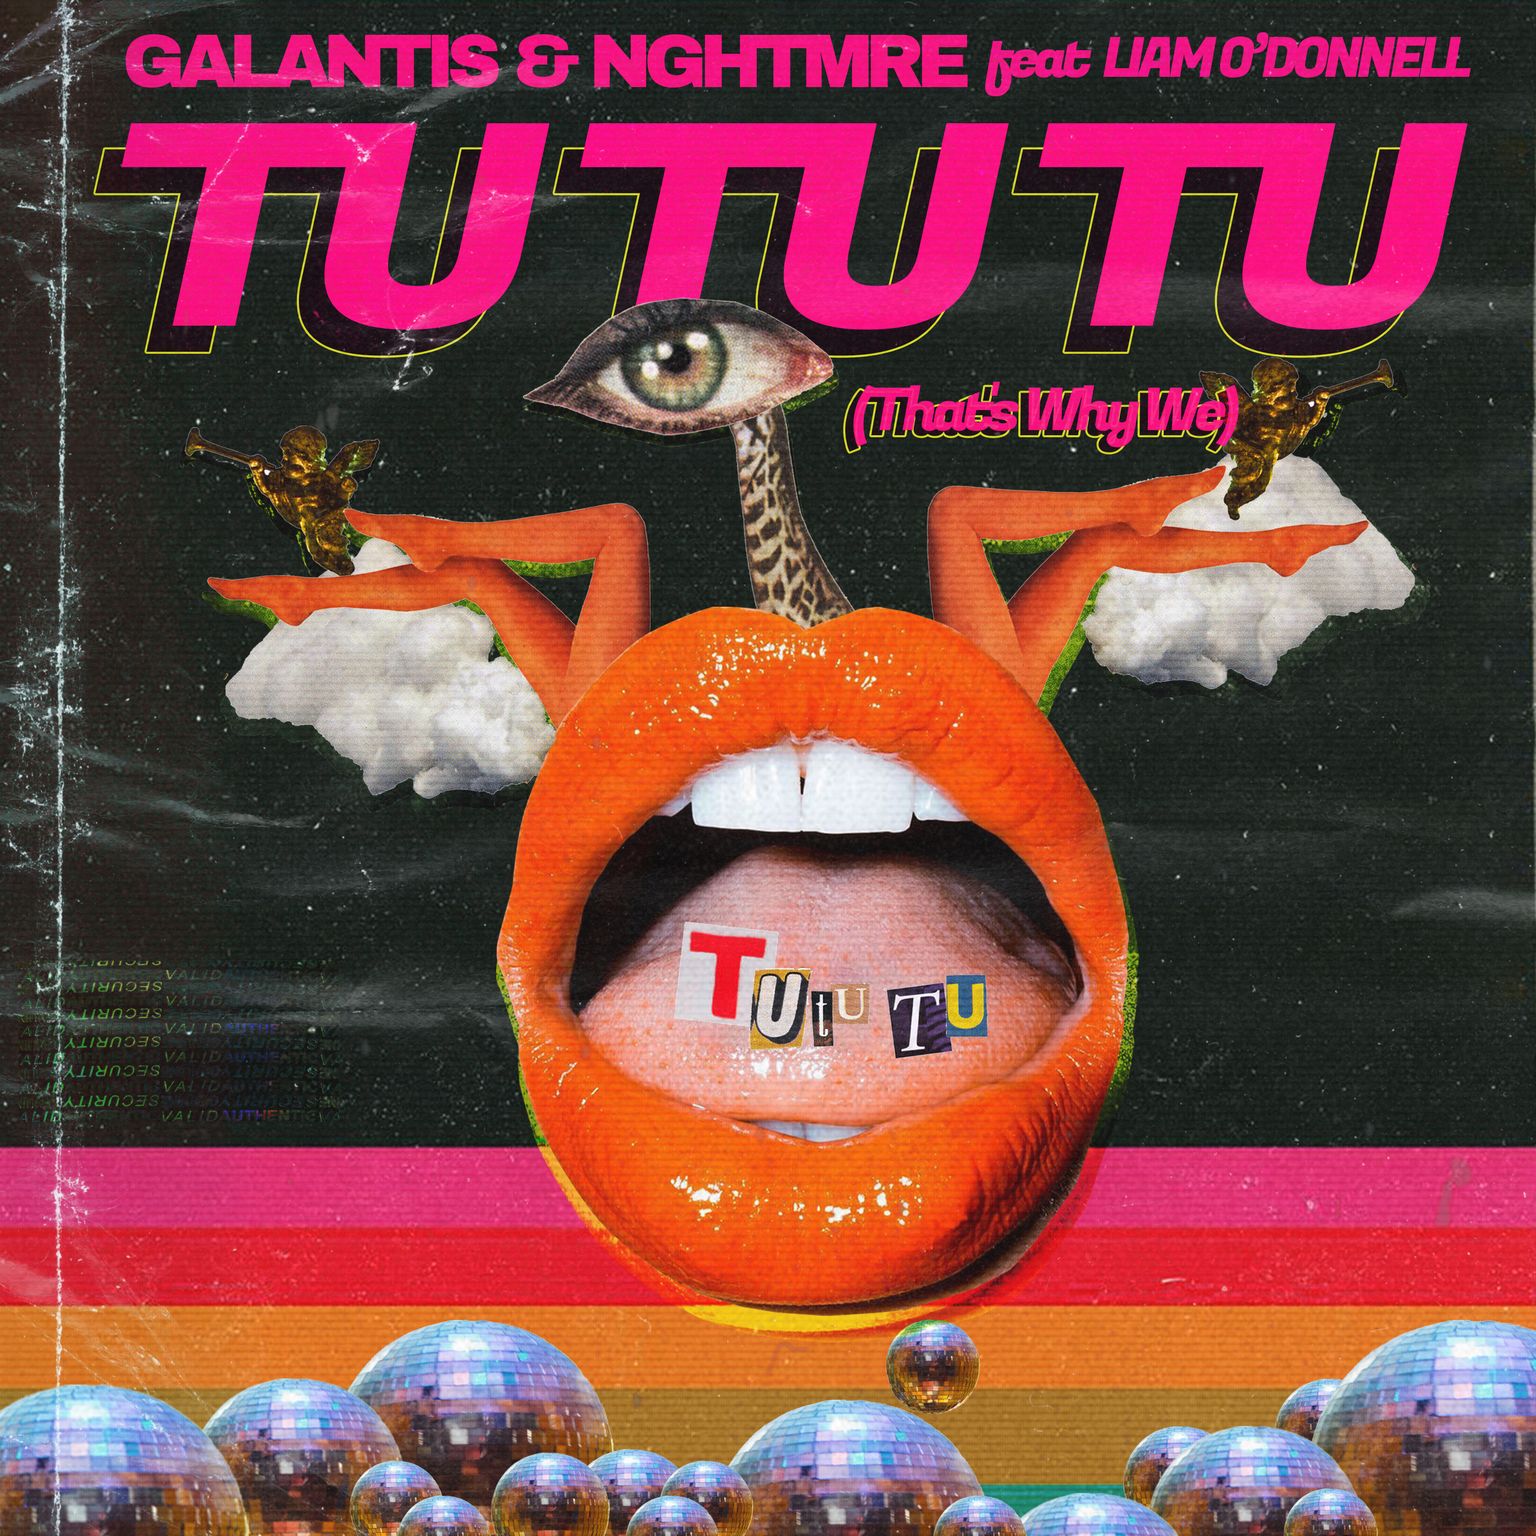 Galantis and NGHTMRE - "Tu Tu Tu" single artwork